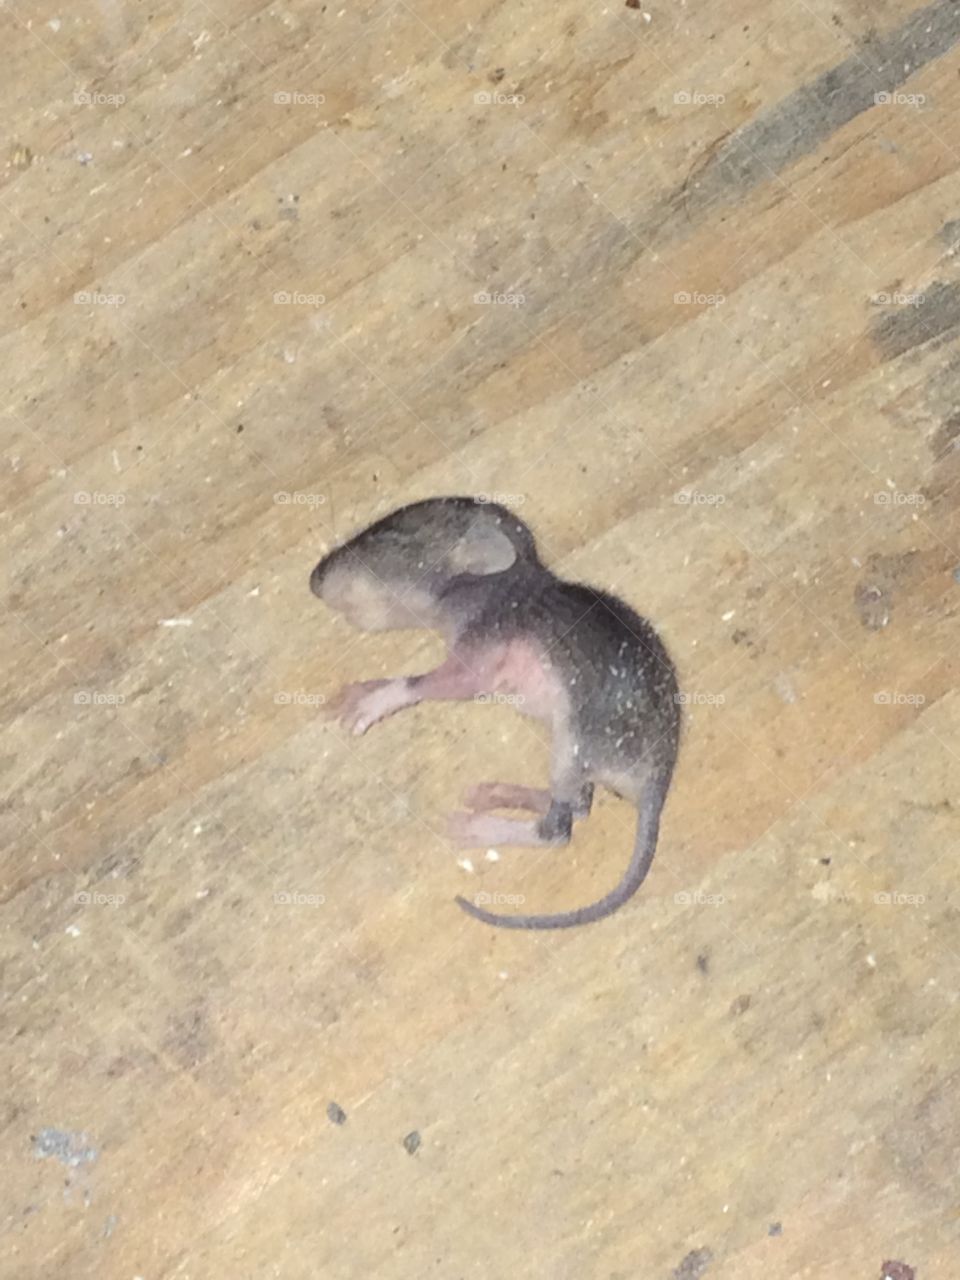 Orphaned Baby Rat!